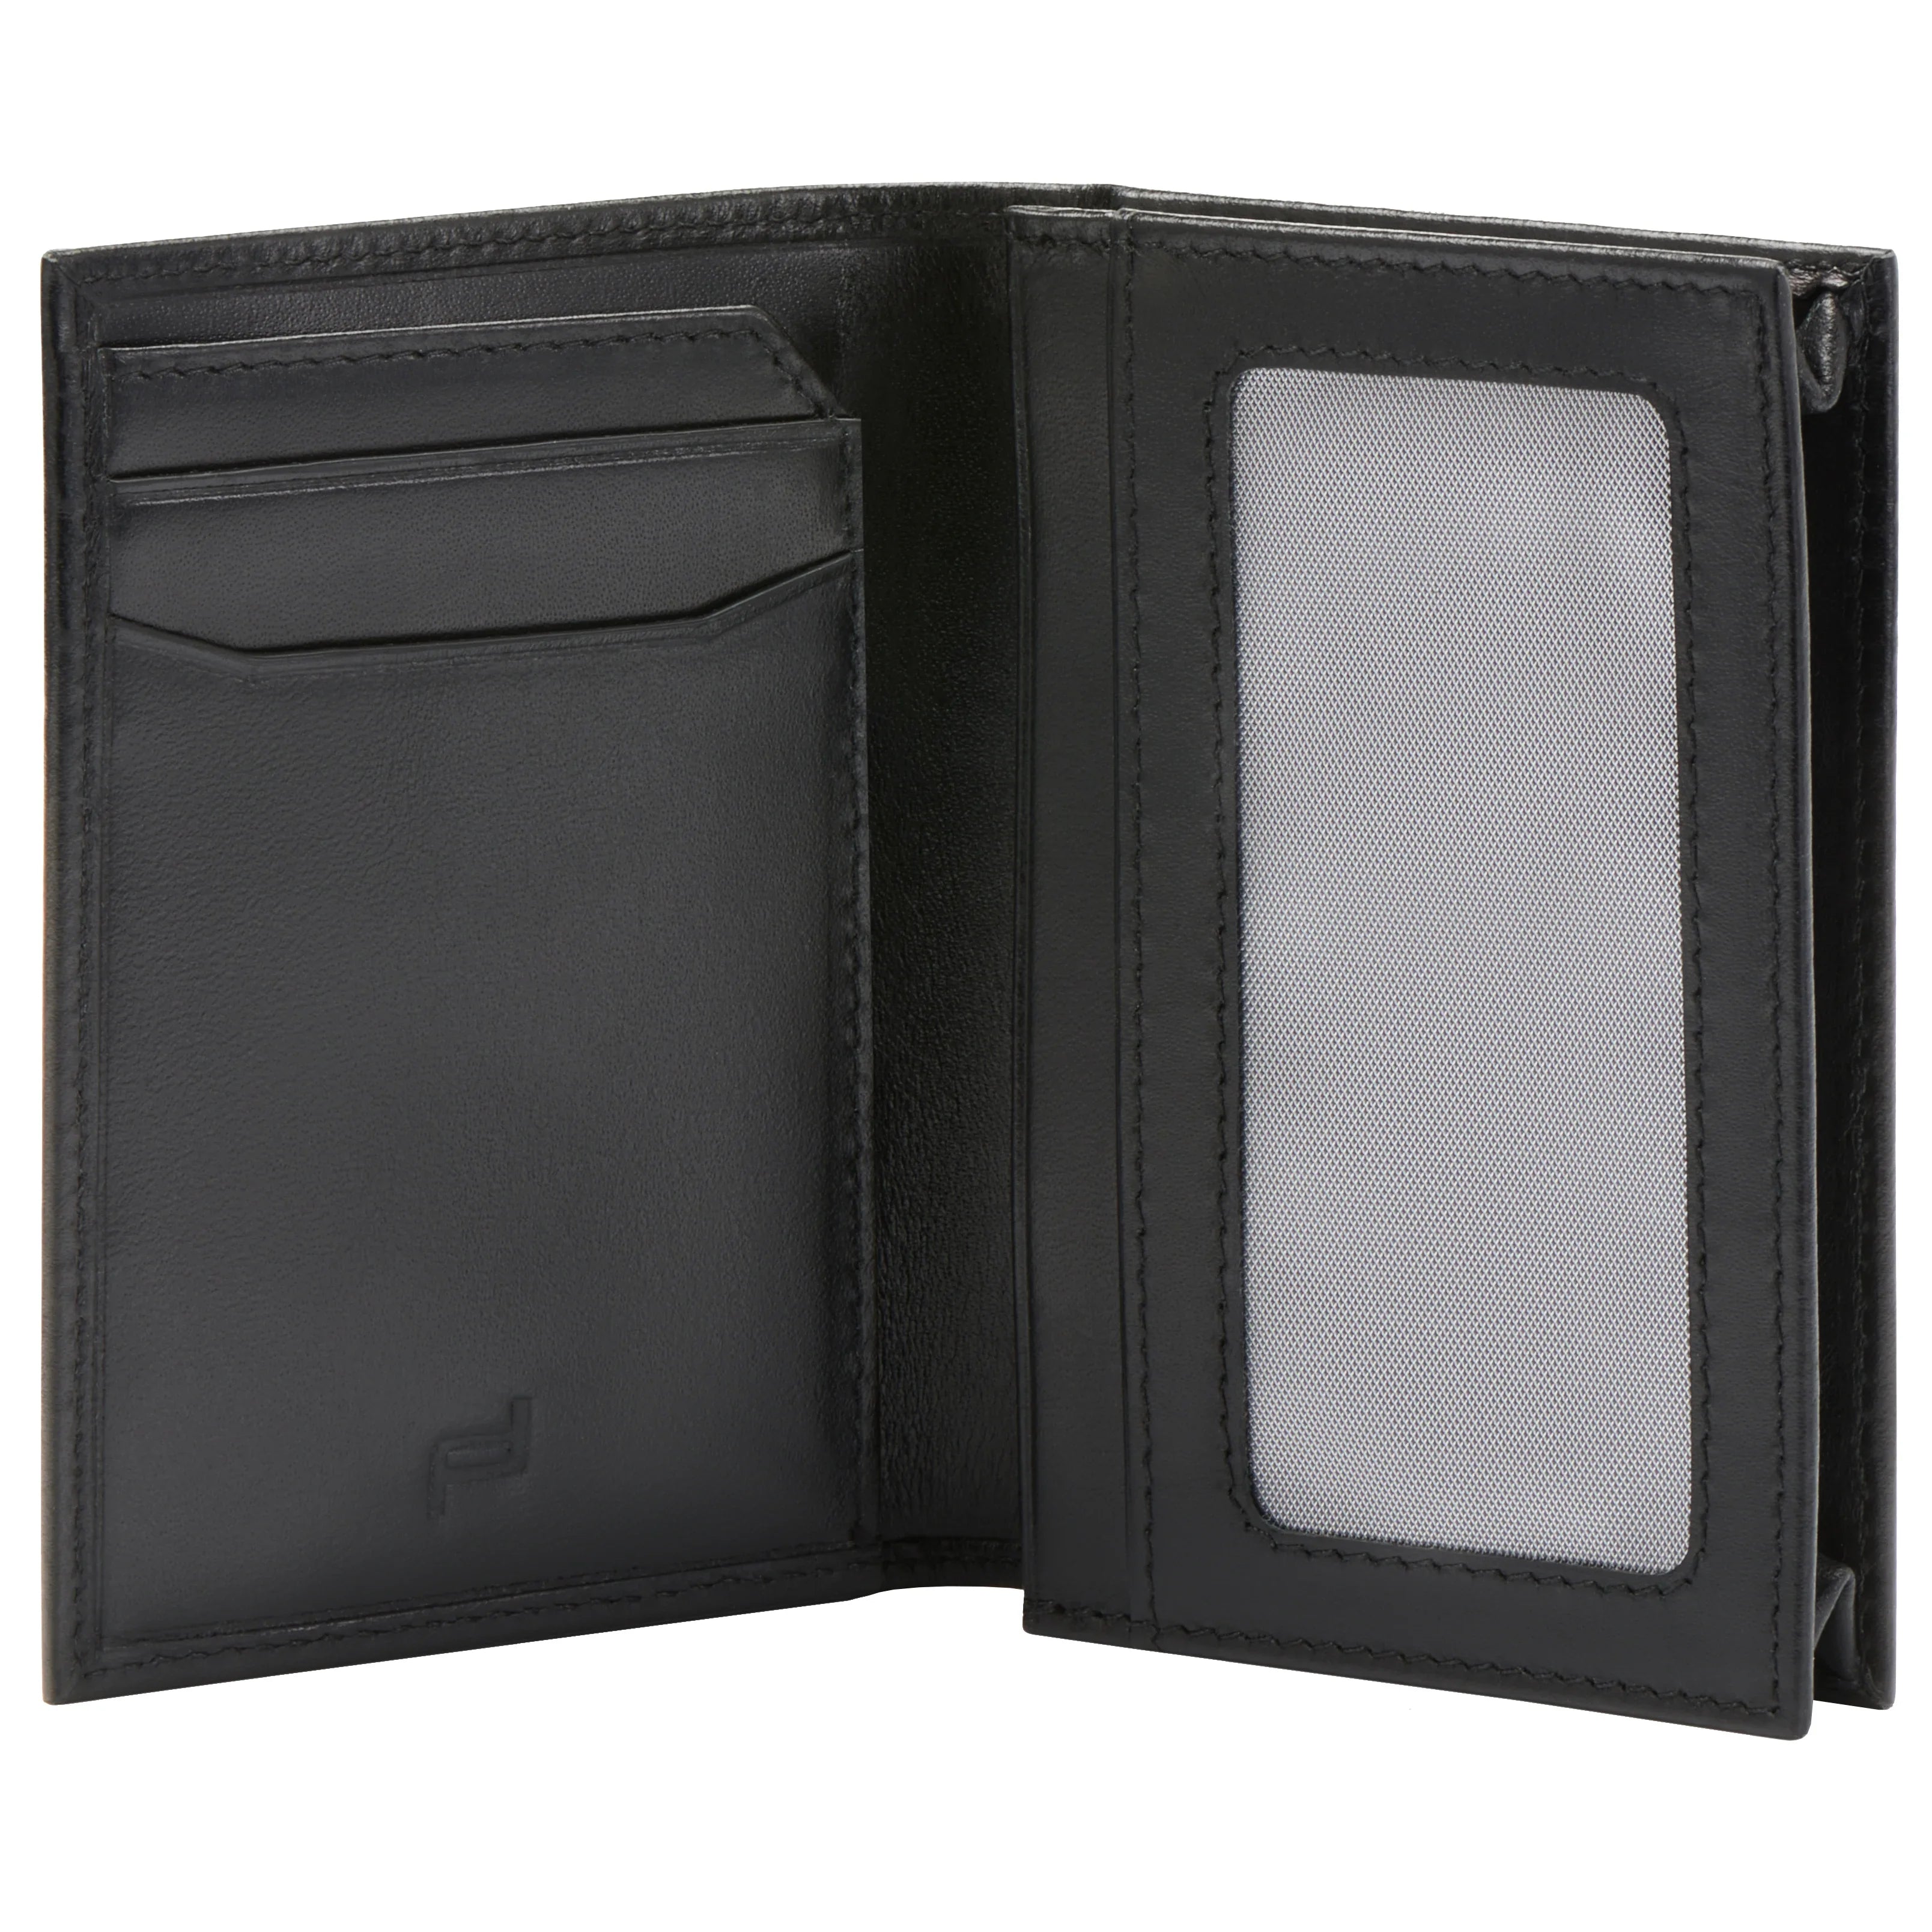 Porsche Design Accessories Classic Cardholder 2 RFID 11 cm - Black